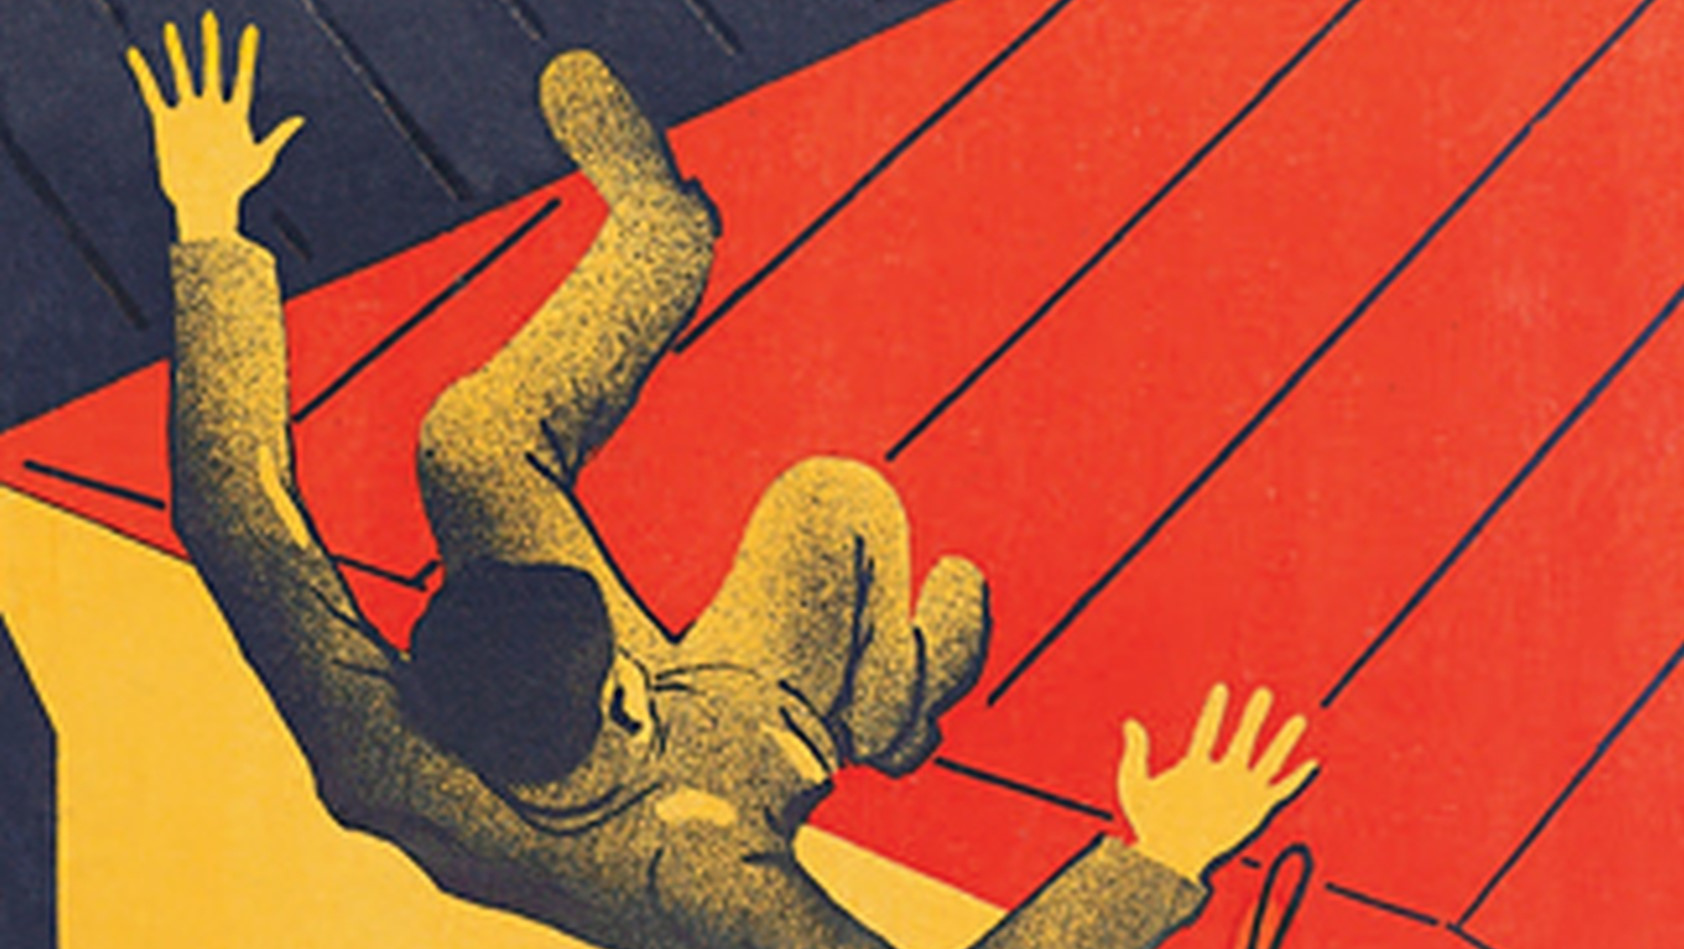 Советский плакат по технике безопасности (фрагмент).